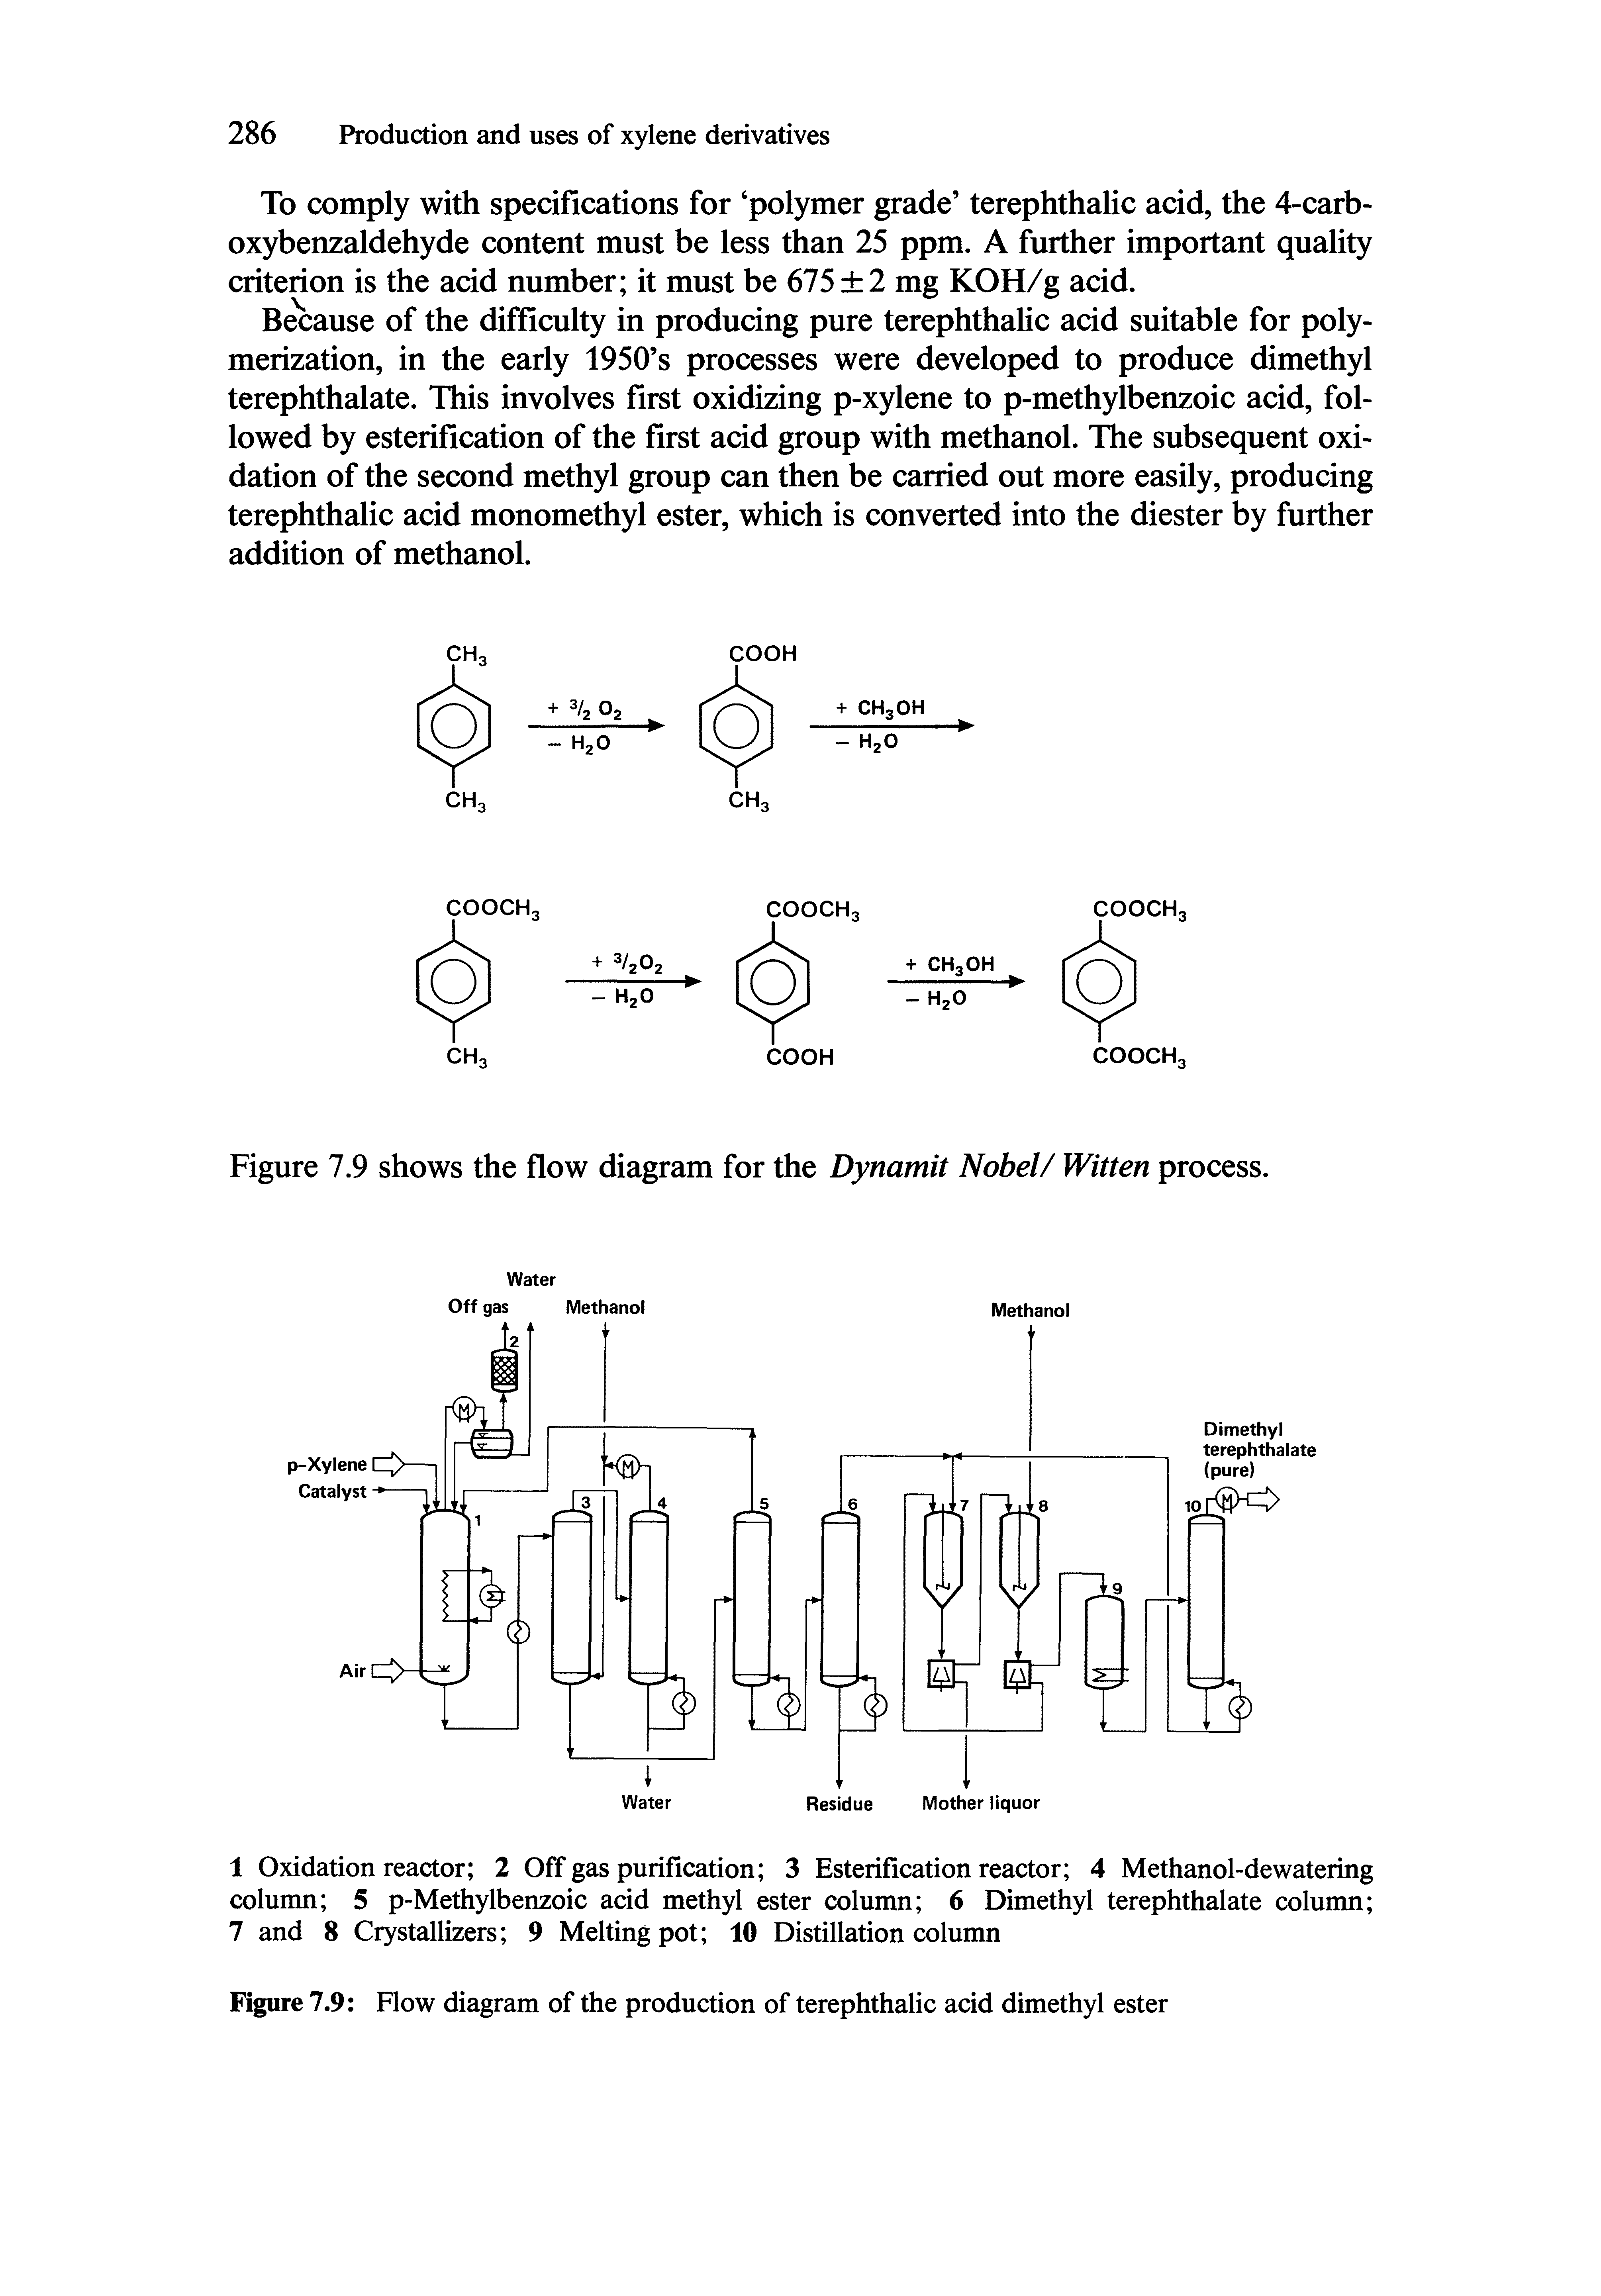 Figure 7.9 Flow diagram of the production of terephthalic acid dimethyl ester...